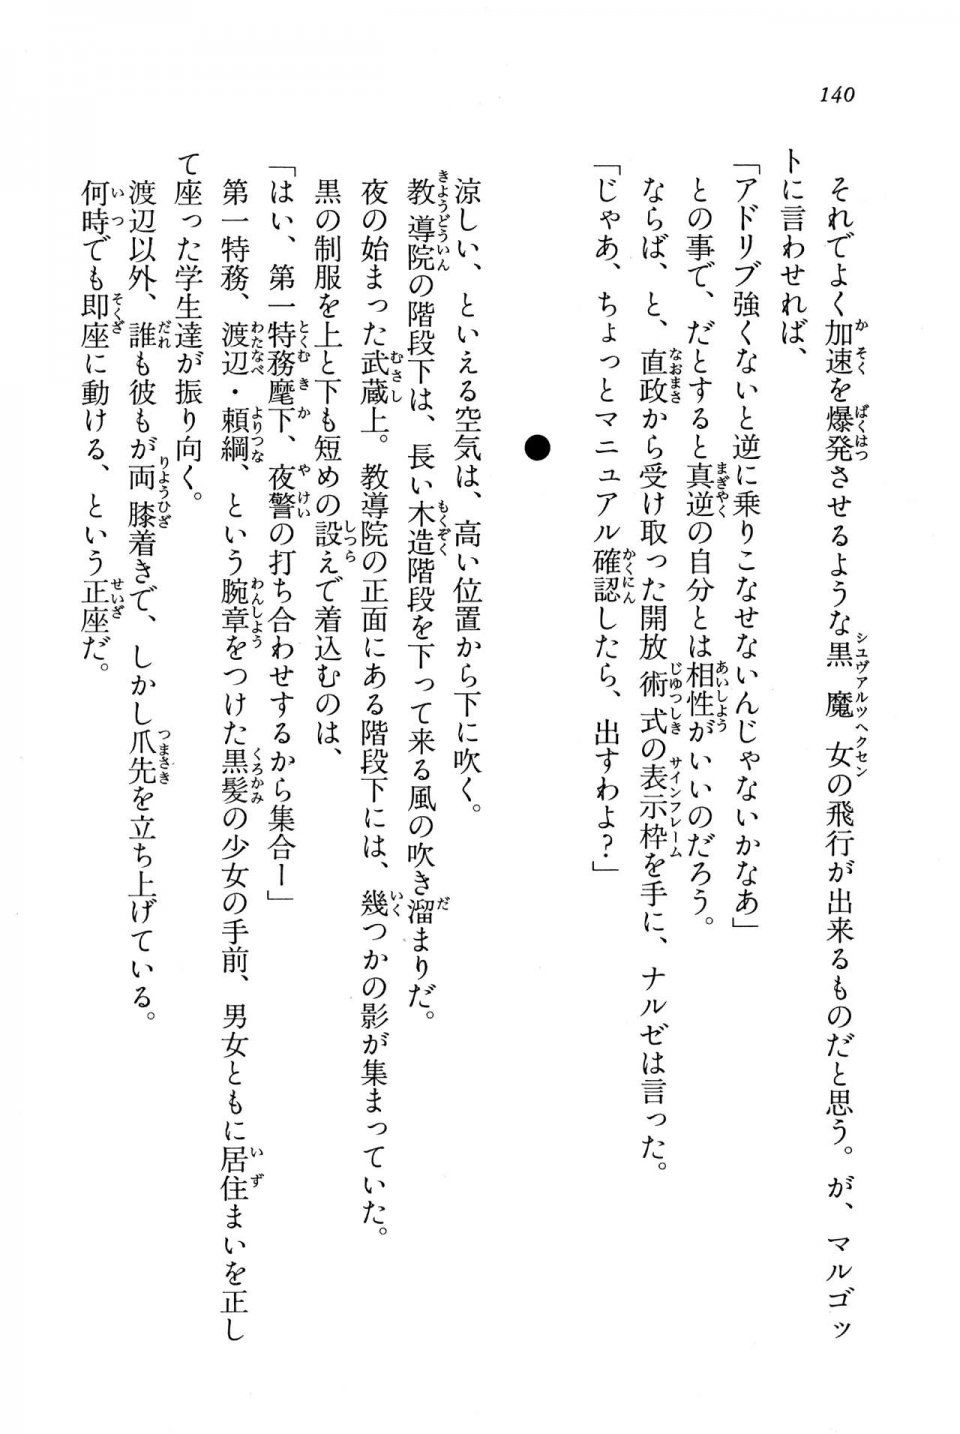 Kyoukai Senjou no Horizon BD Special Mininovel Vol 7(4A) - Photo #144